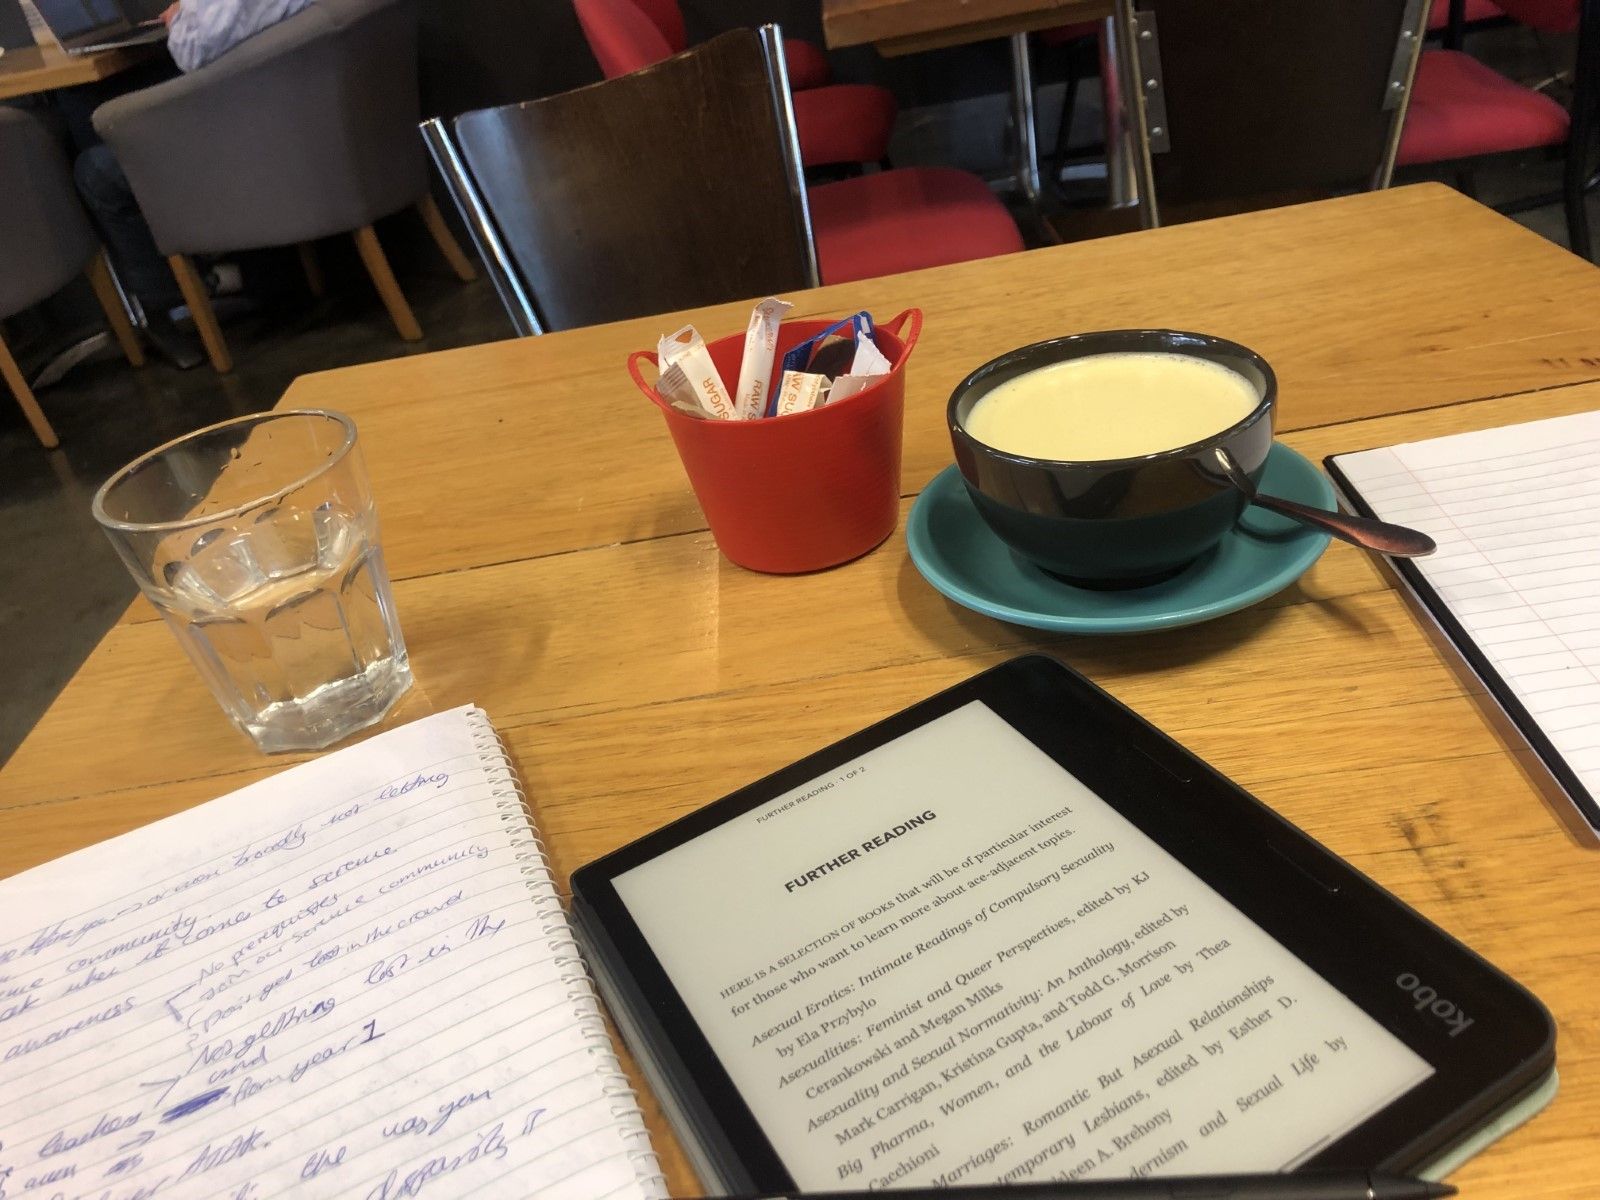 Notebooks and an e-reader strewn across a cafe table alongside a turmeric latte. 